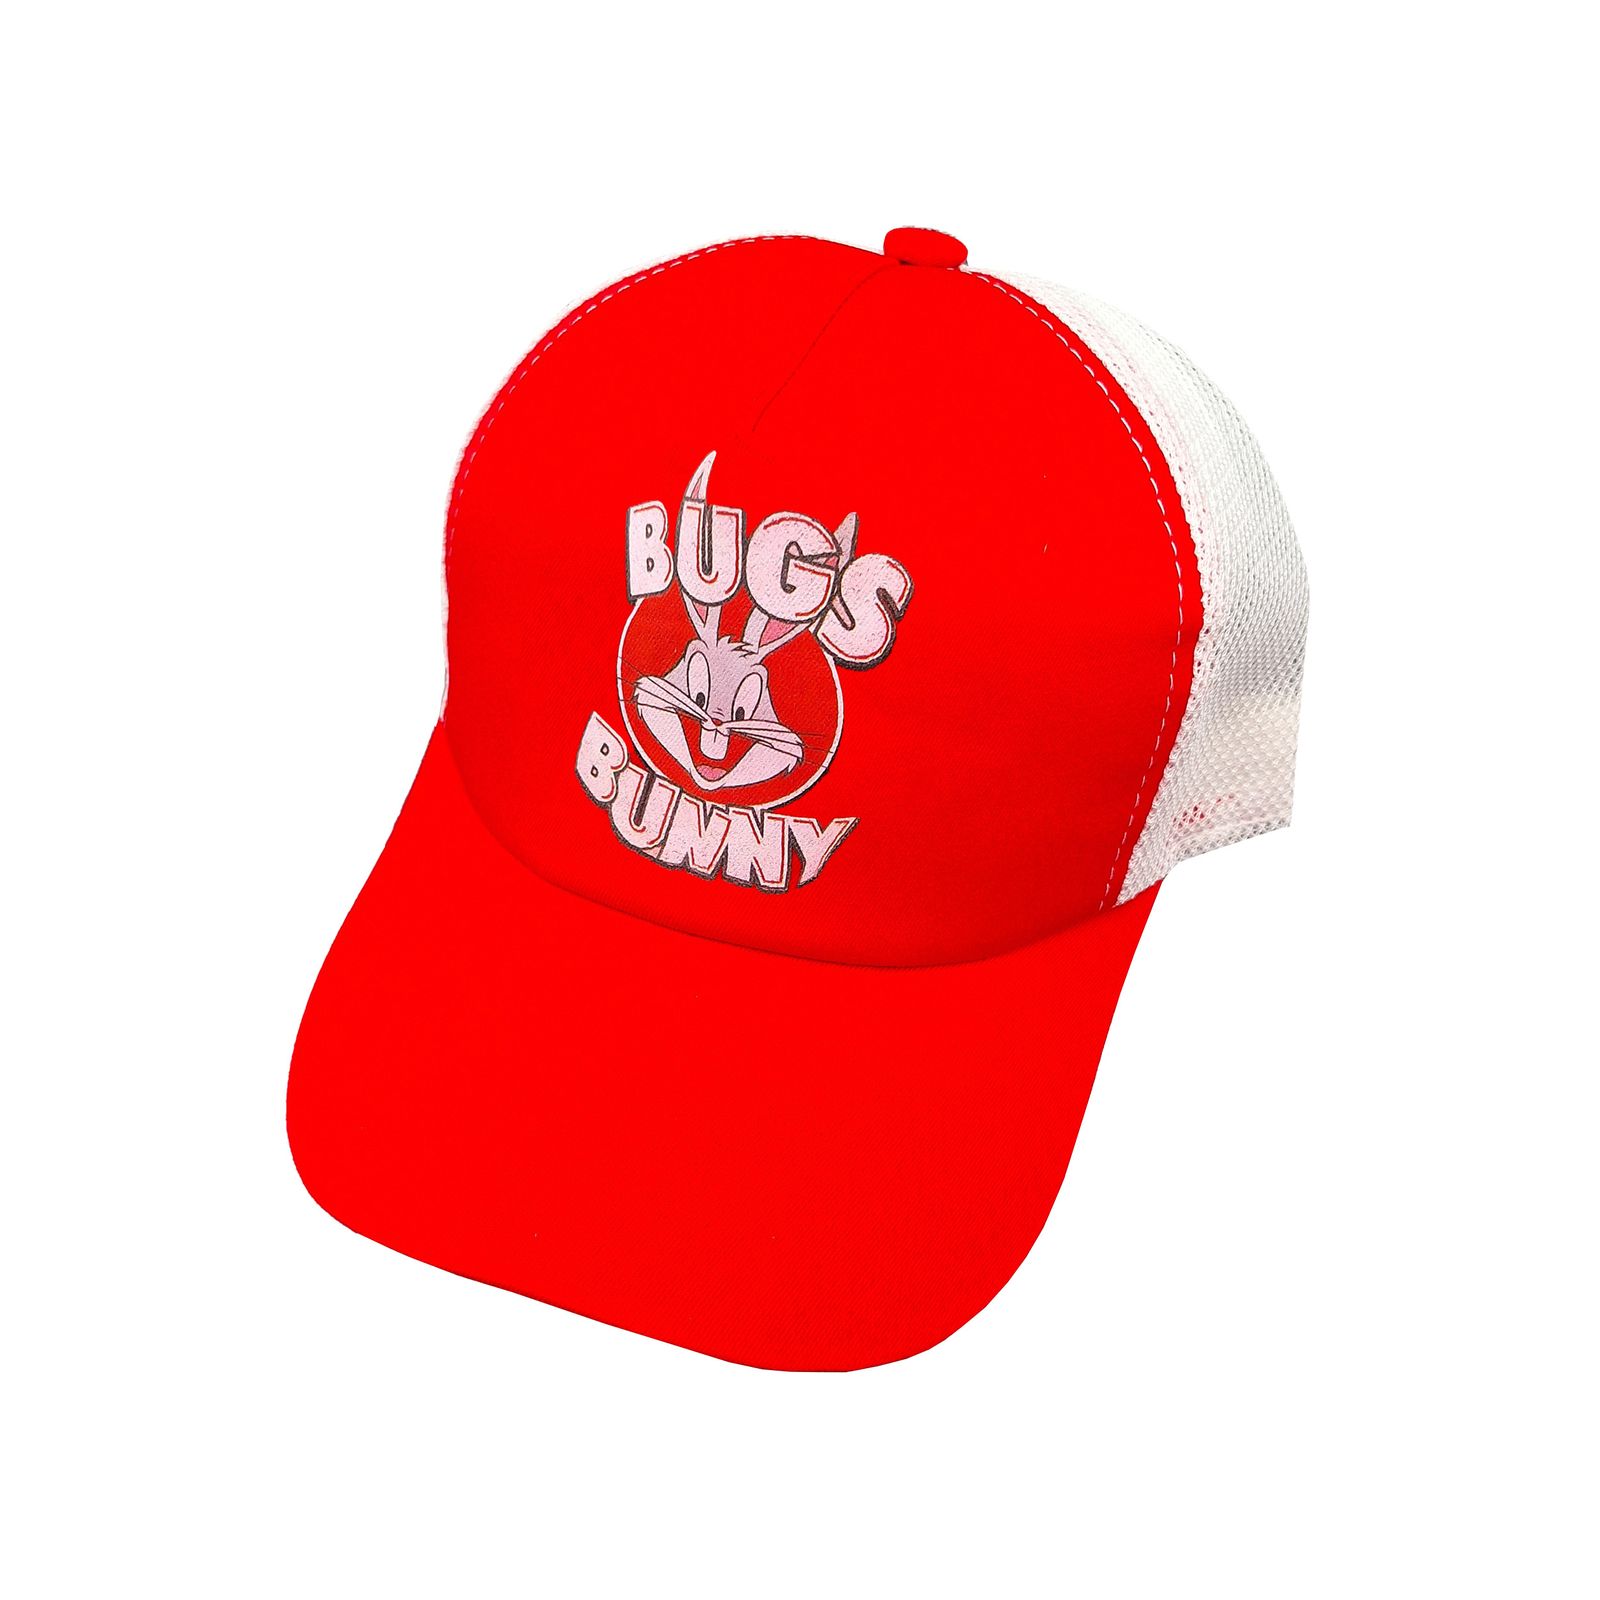 کلاه کپ بچگانه مدل BUGS کد 1217 رنگ قرمز -  - 1